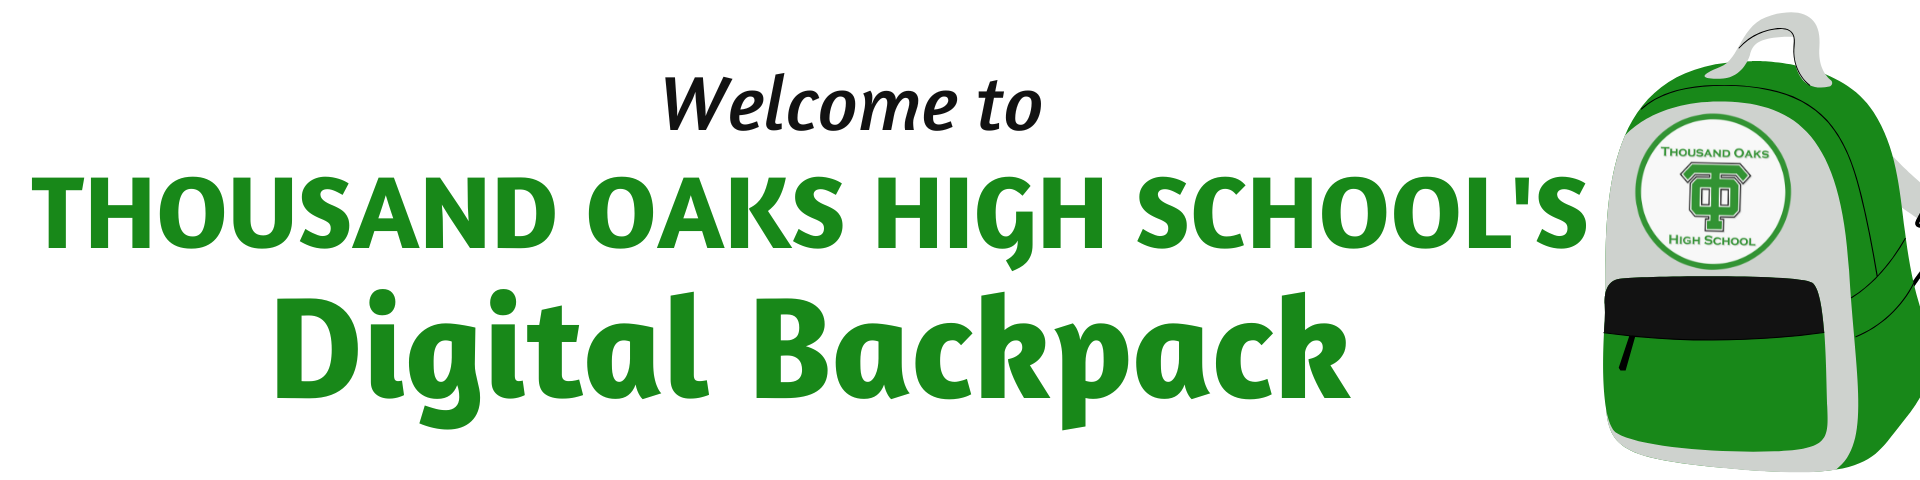 Welcome to Thousand Oaks High School's Digital Backpack